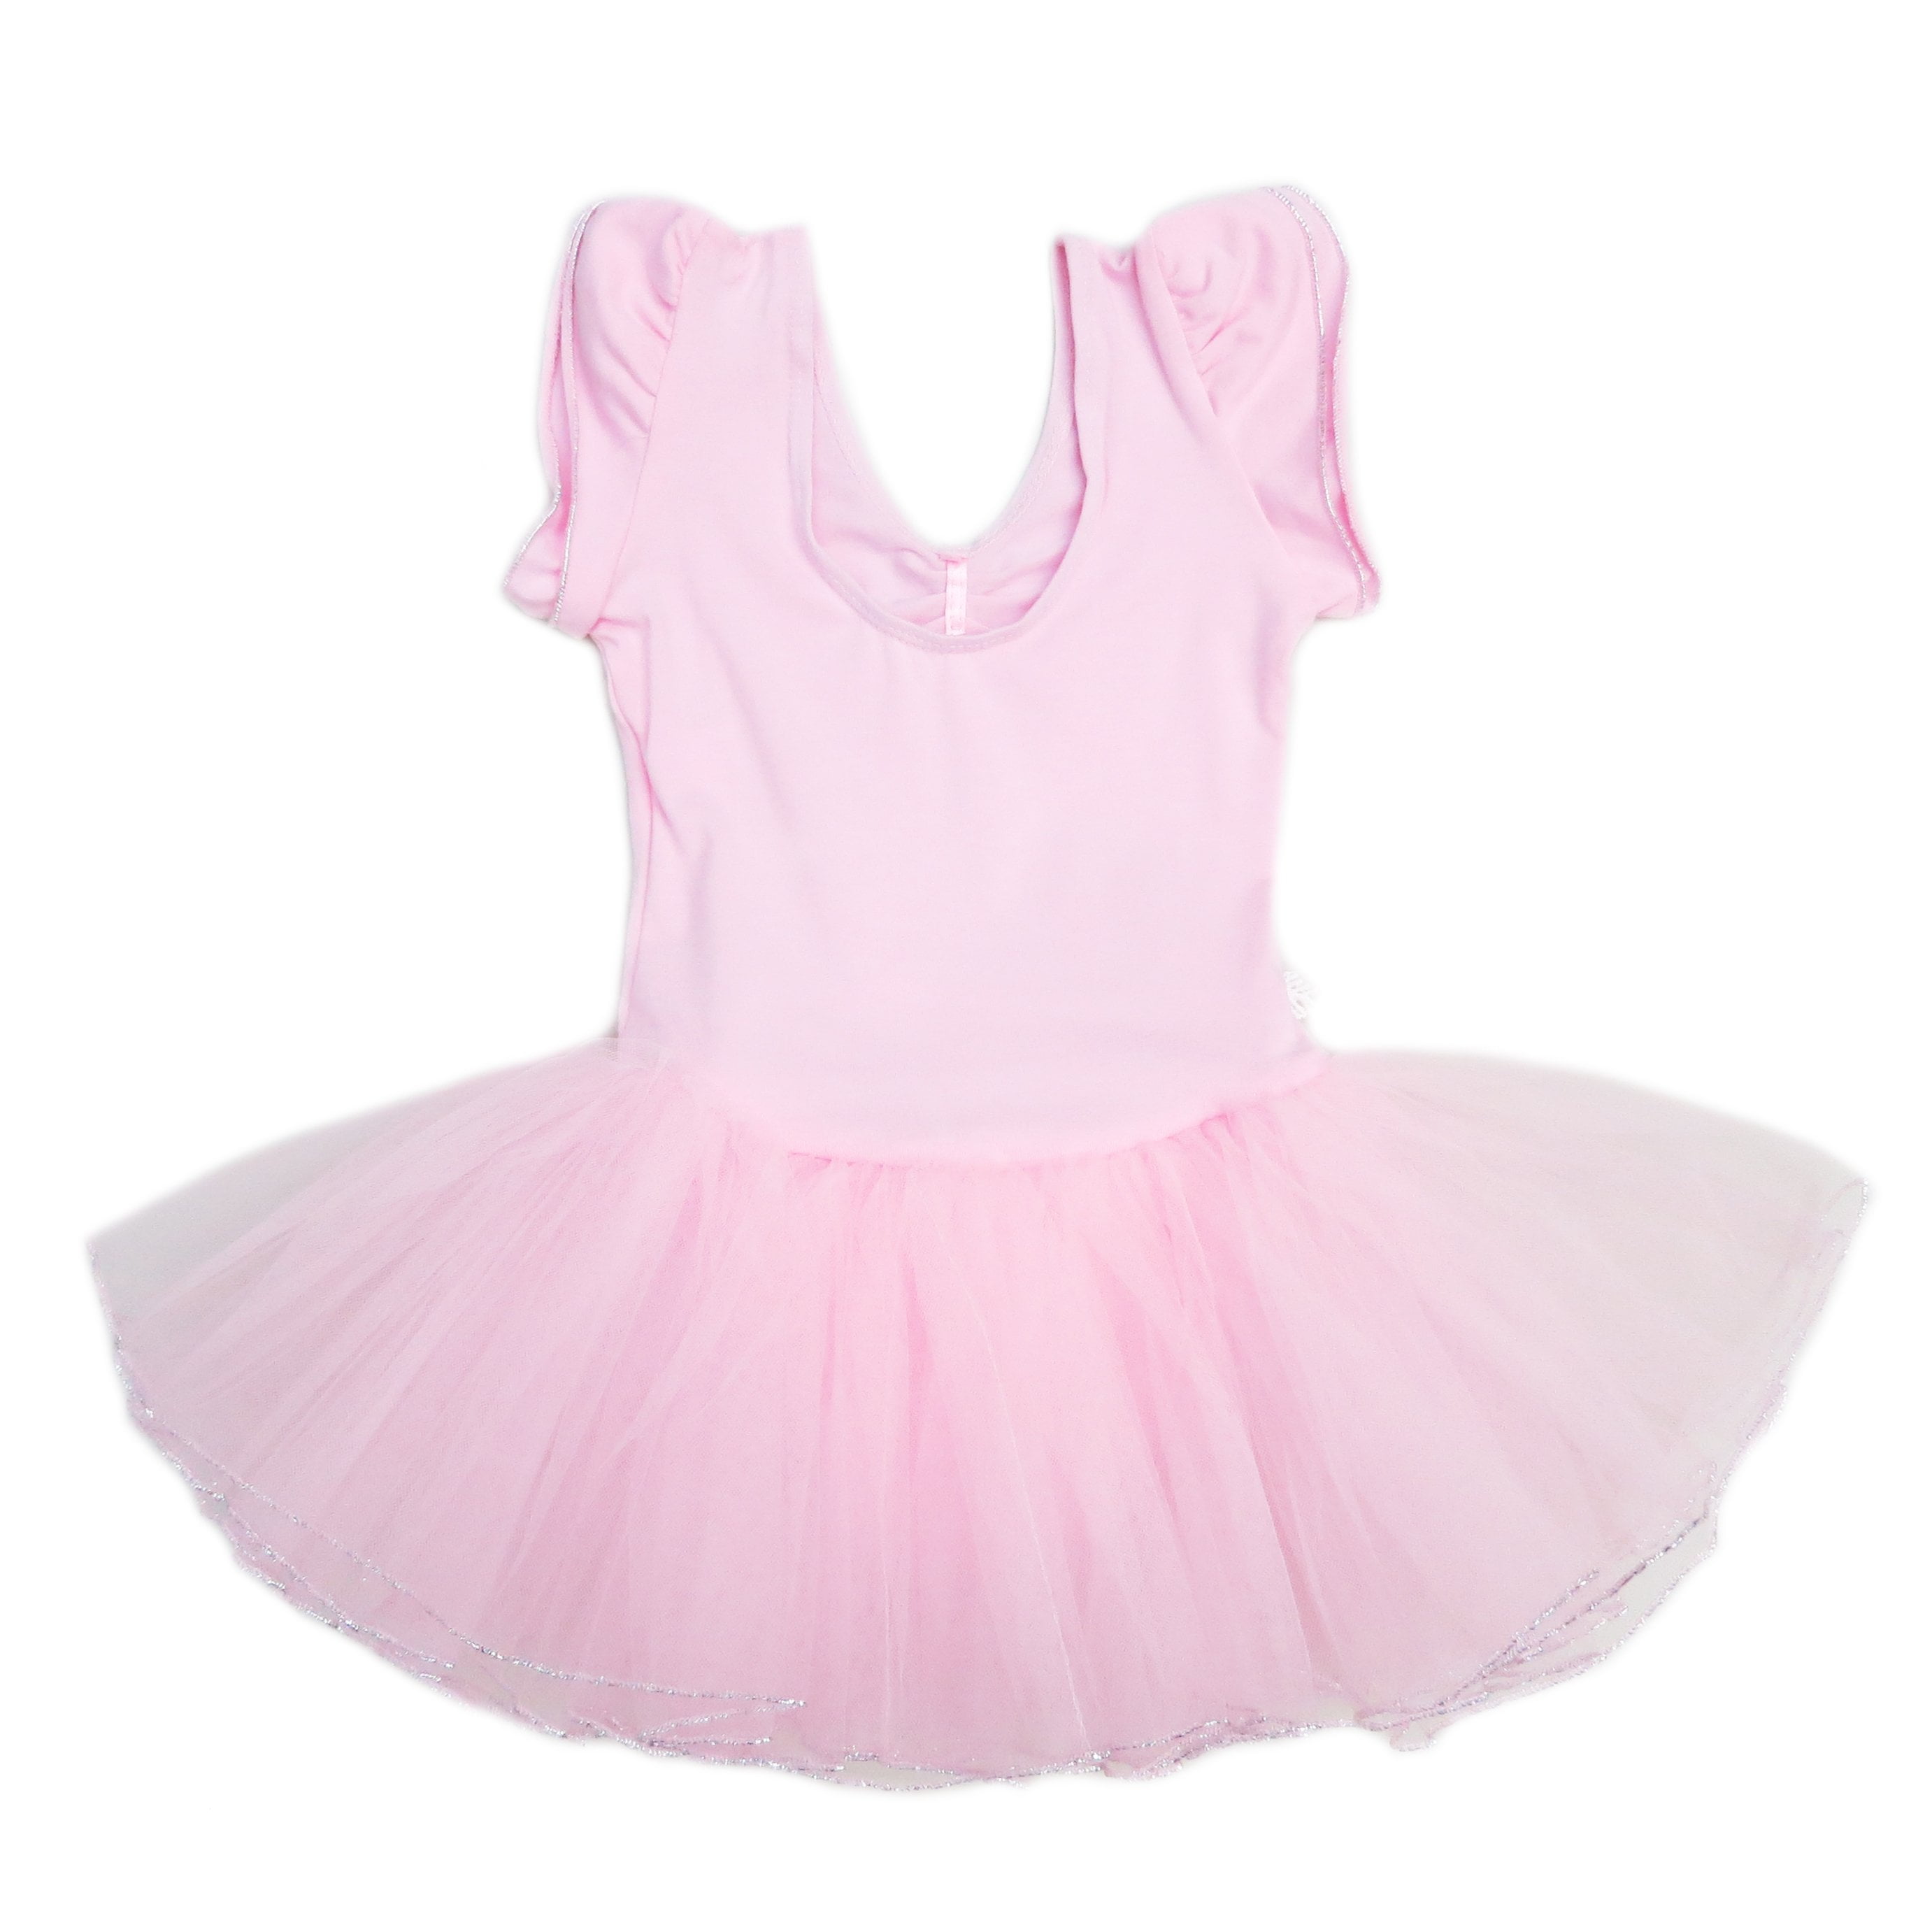 Lito Angels Girls Dancewear Dance Costume Ballet Tutu Leotard Fairy Costume Ribbon Trimmed Size 4-5 Years White 